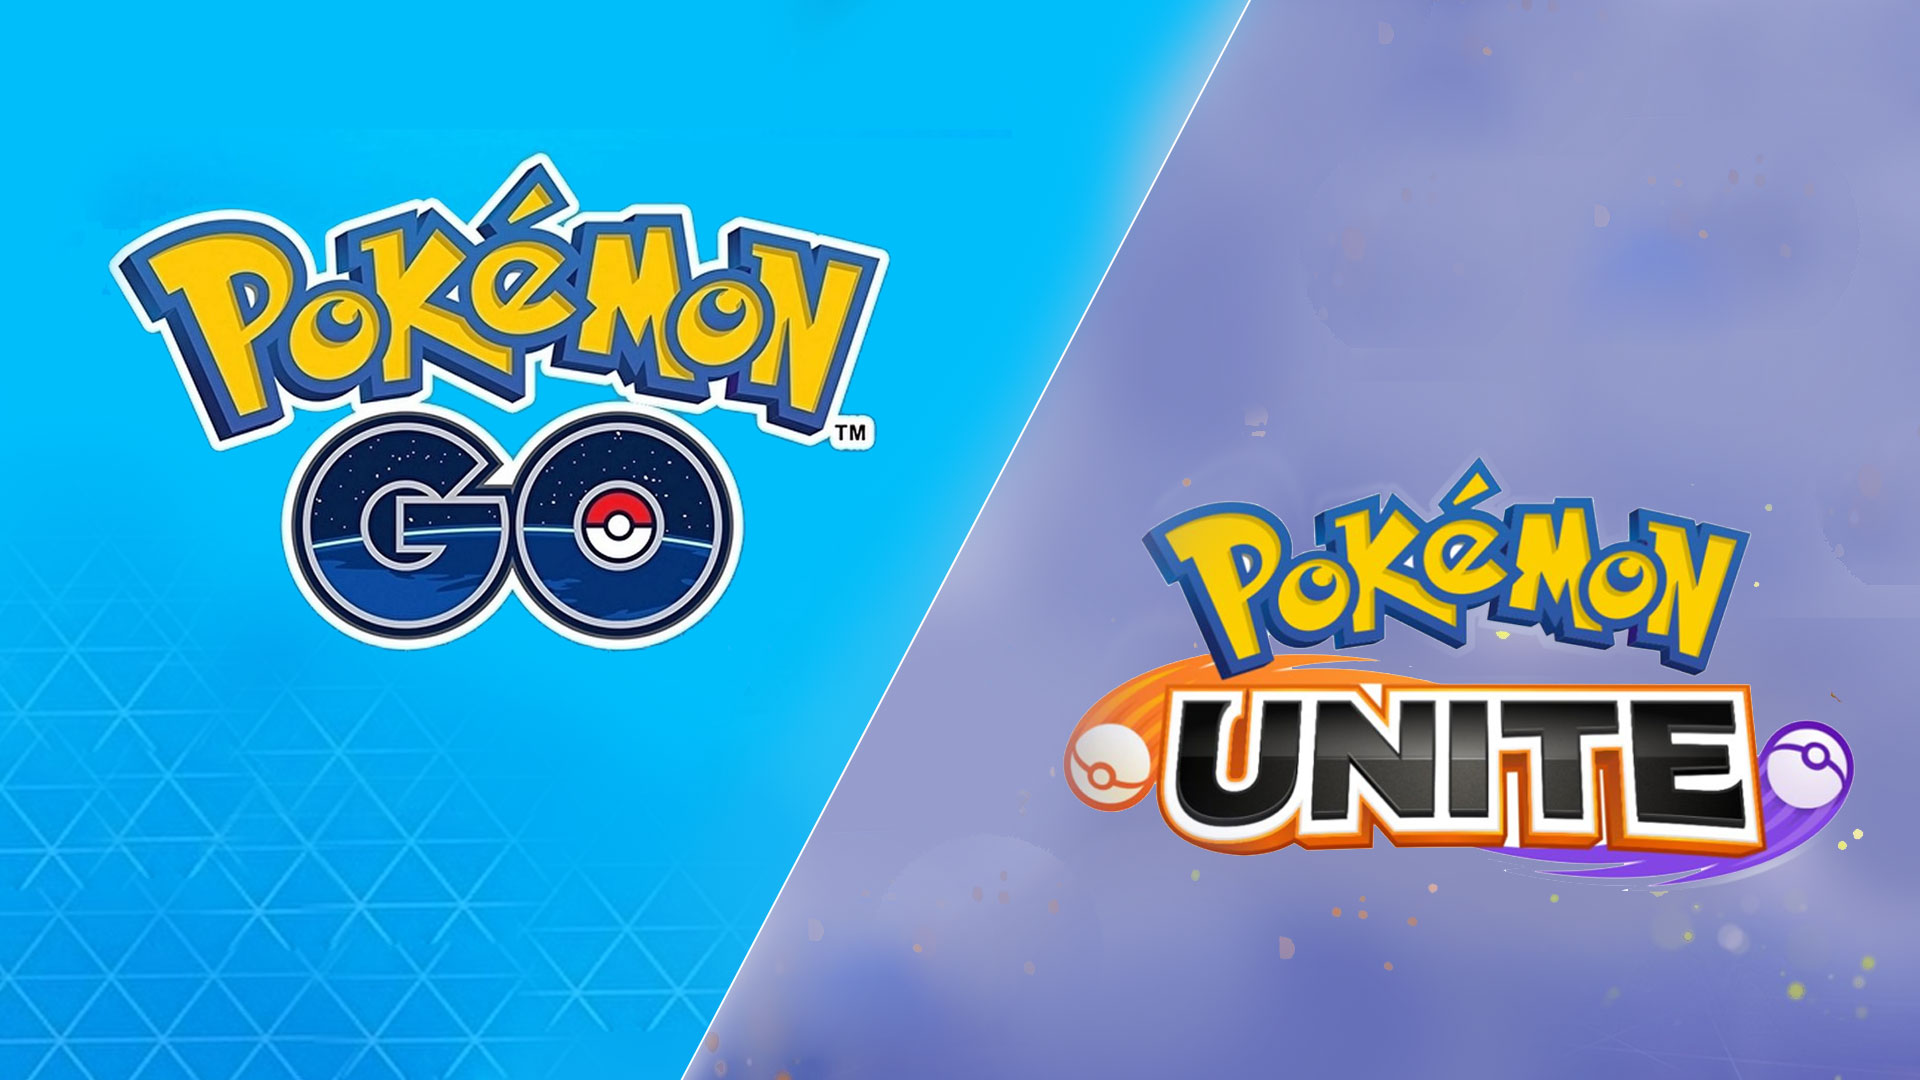 Pokémon Unite: tier list, downloads, and mobile game explained